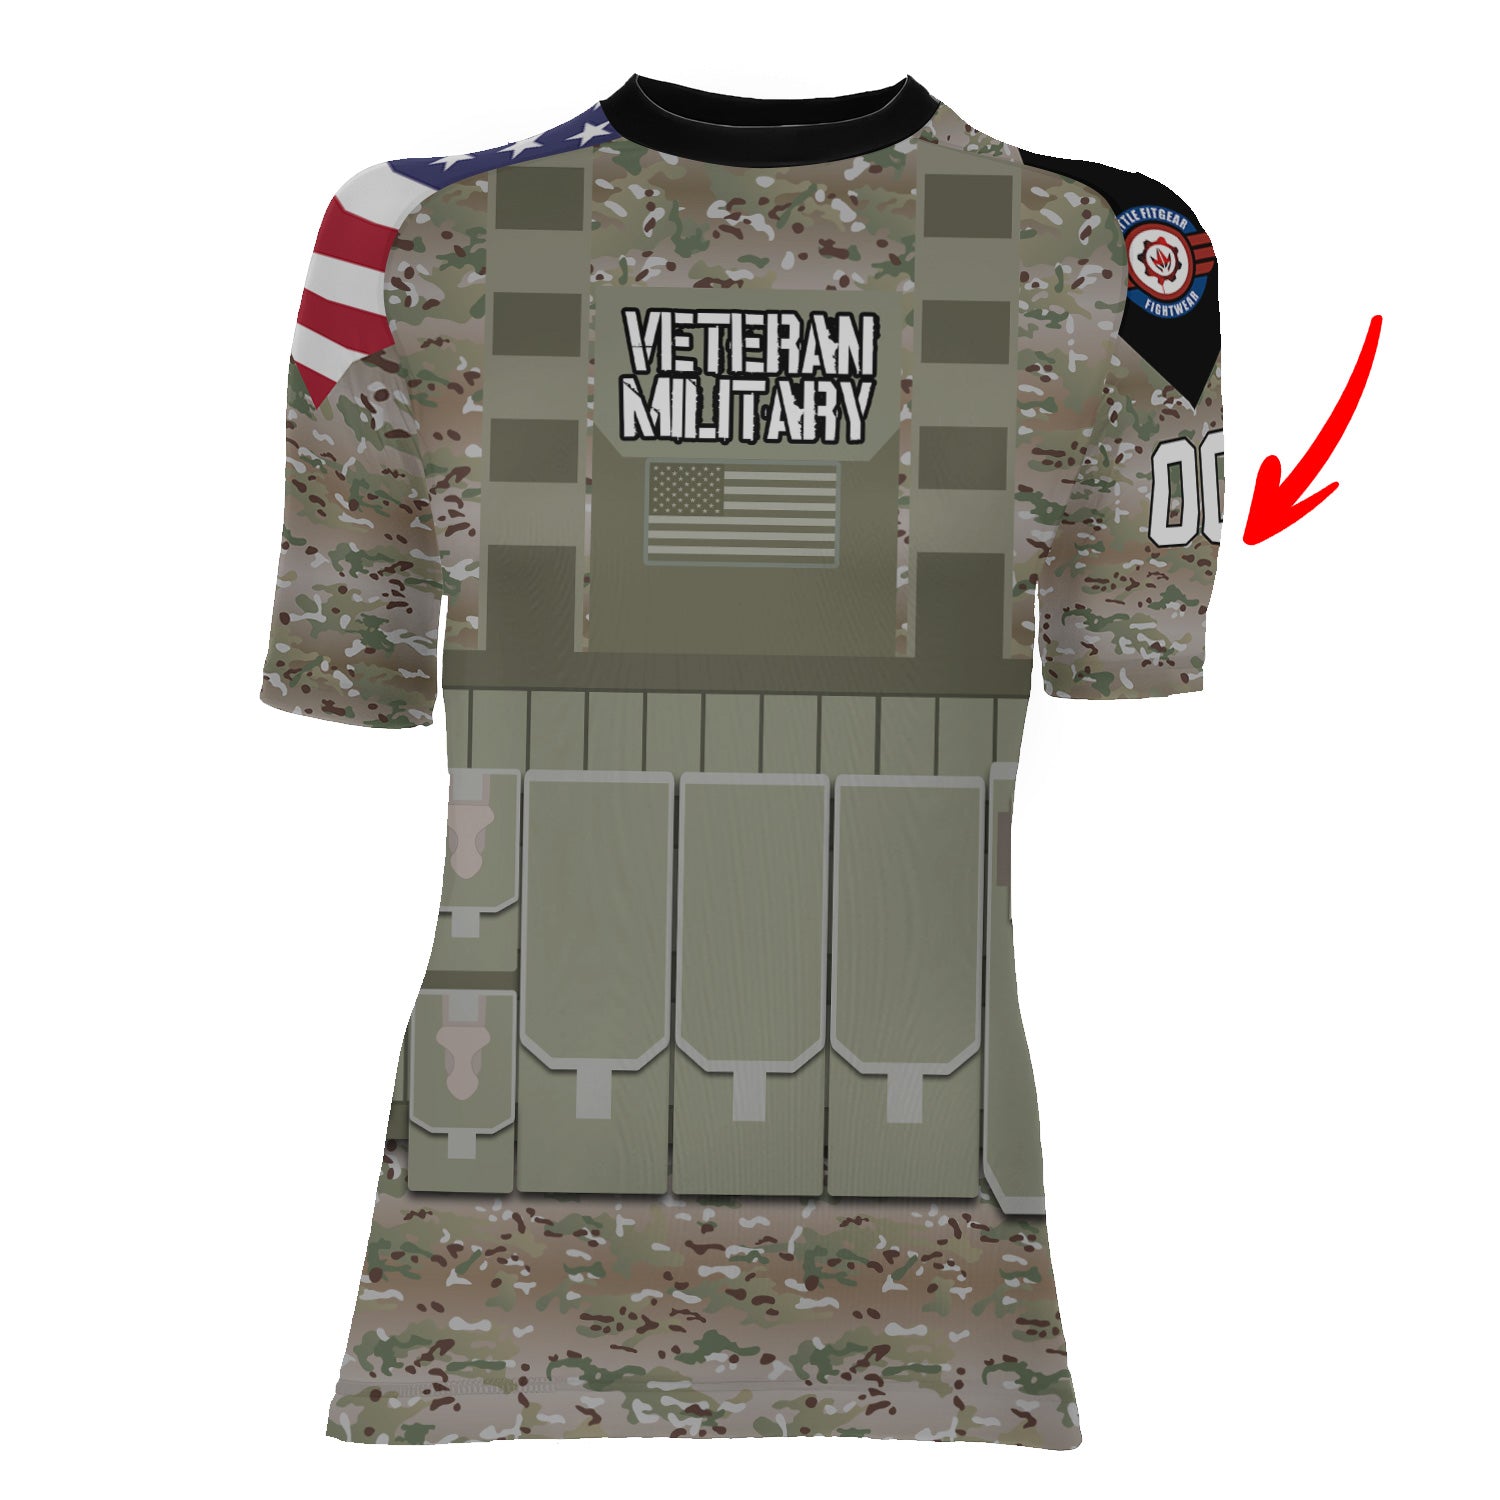 Personalized USA Army Veteran Military Women's Short Sleeve Rash Guard